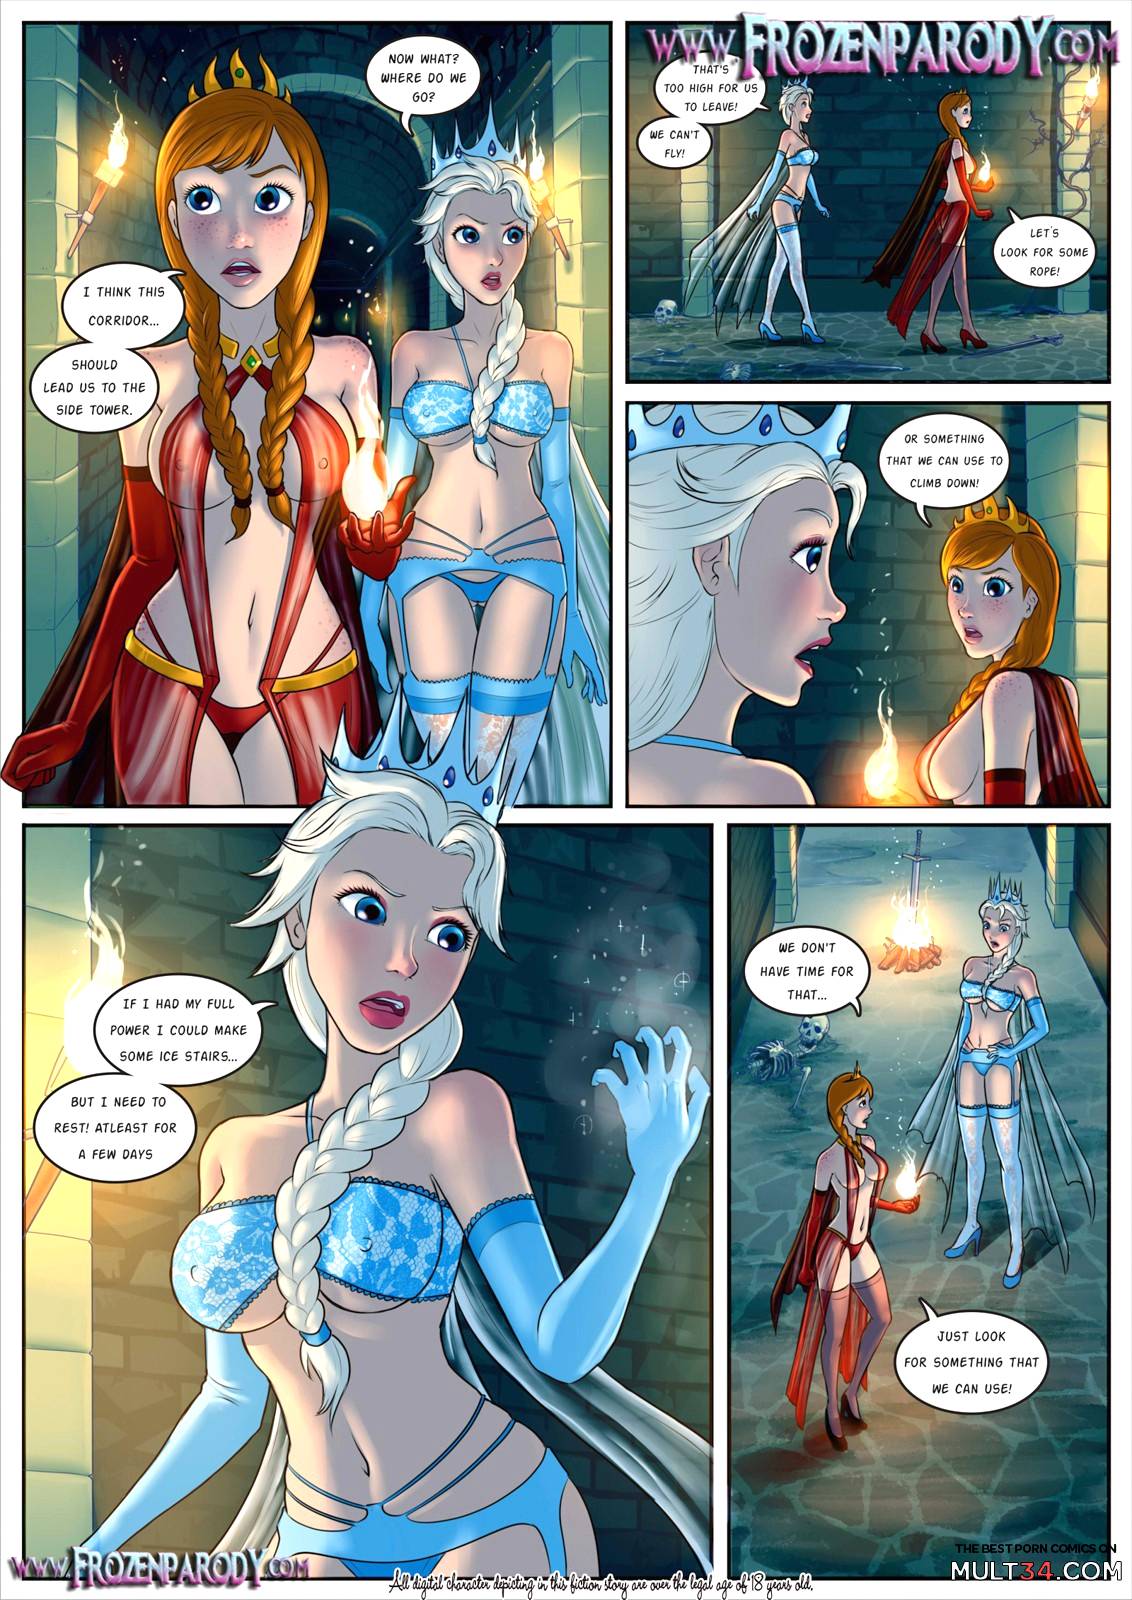 Disney Frozen Cartoon Porn - Frozen Parody 5 porn comic - the best cartoon porn comics, Rule 34 | MULT34